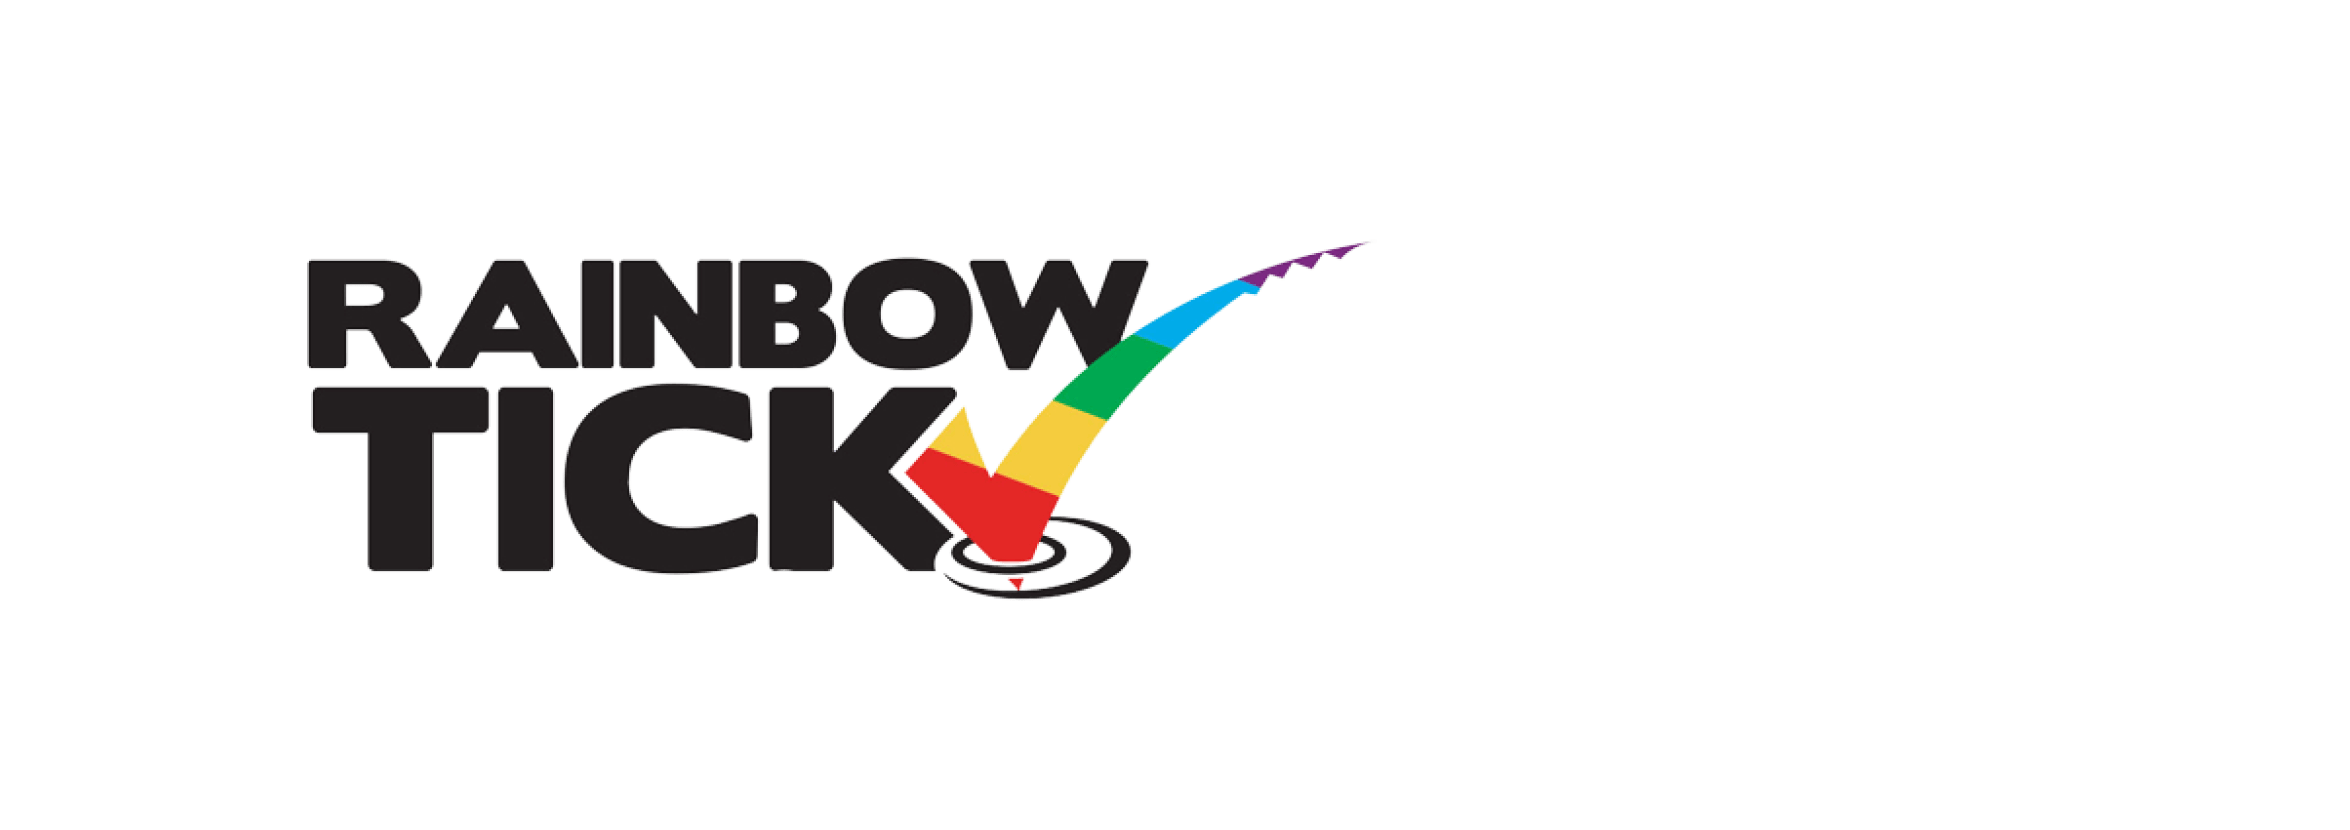 The Rainbow Tick logo